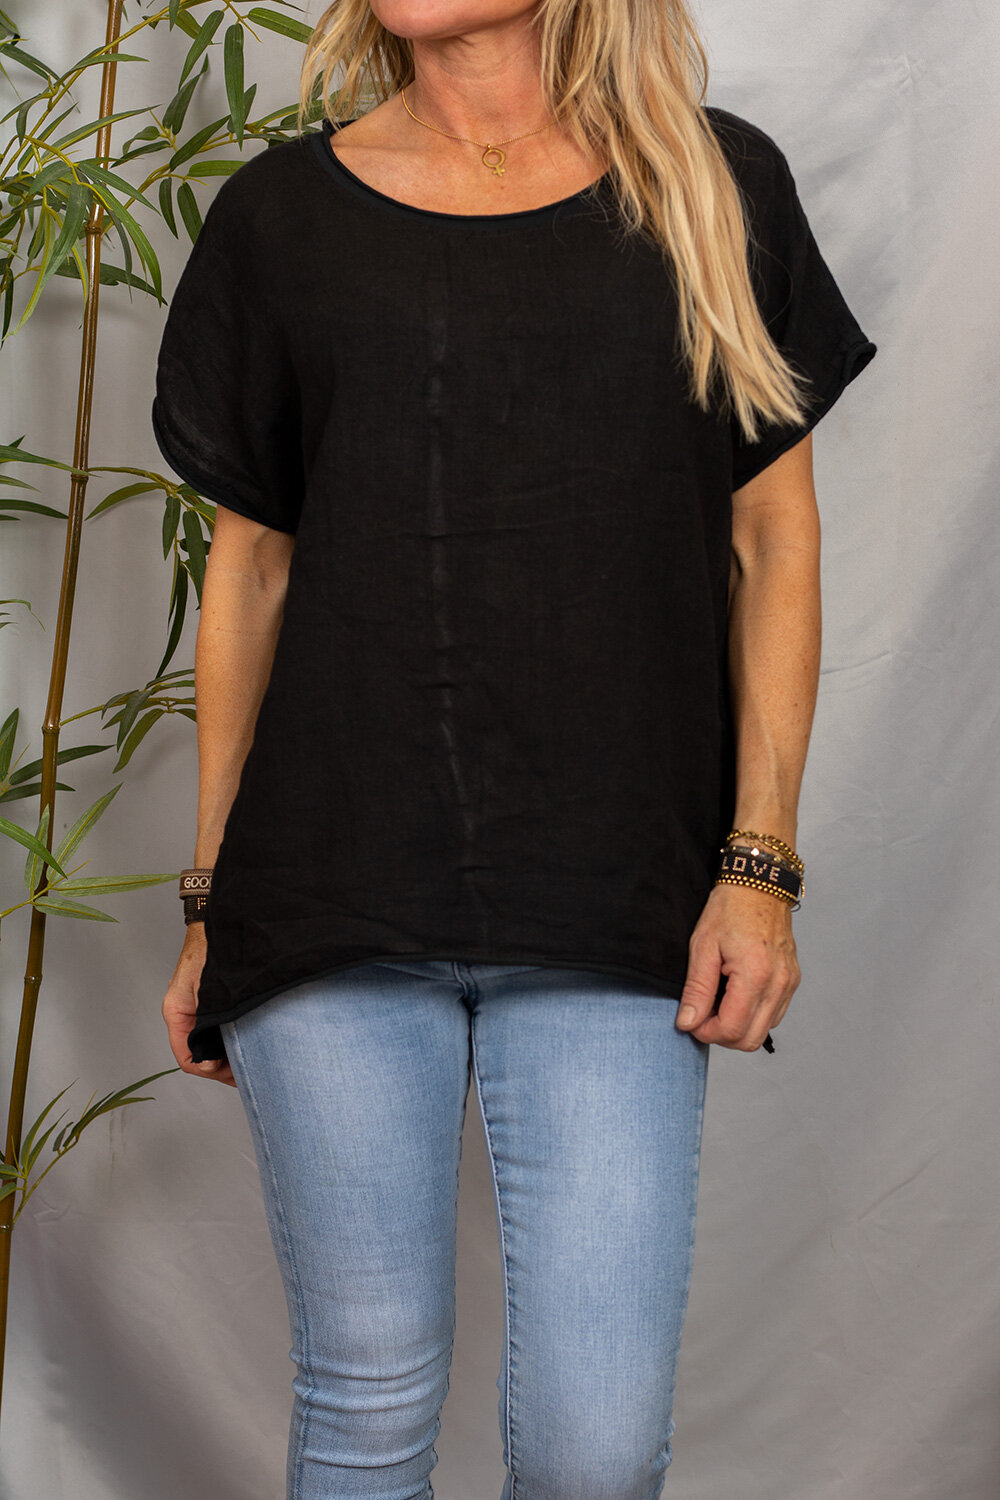 Ronja top - Linen fabric - Black